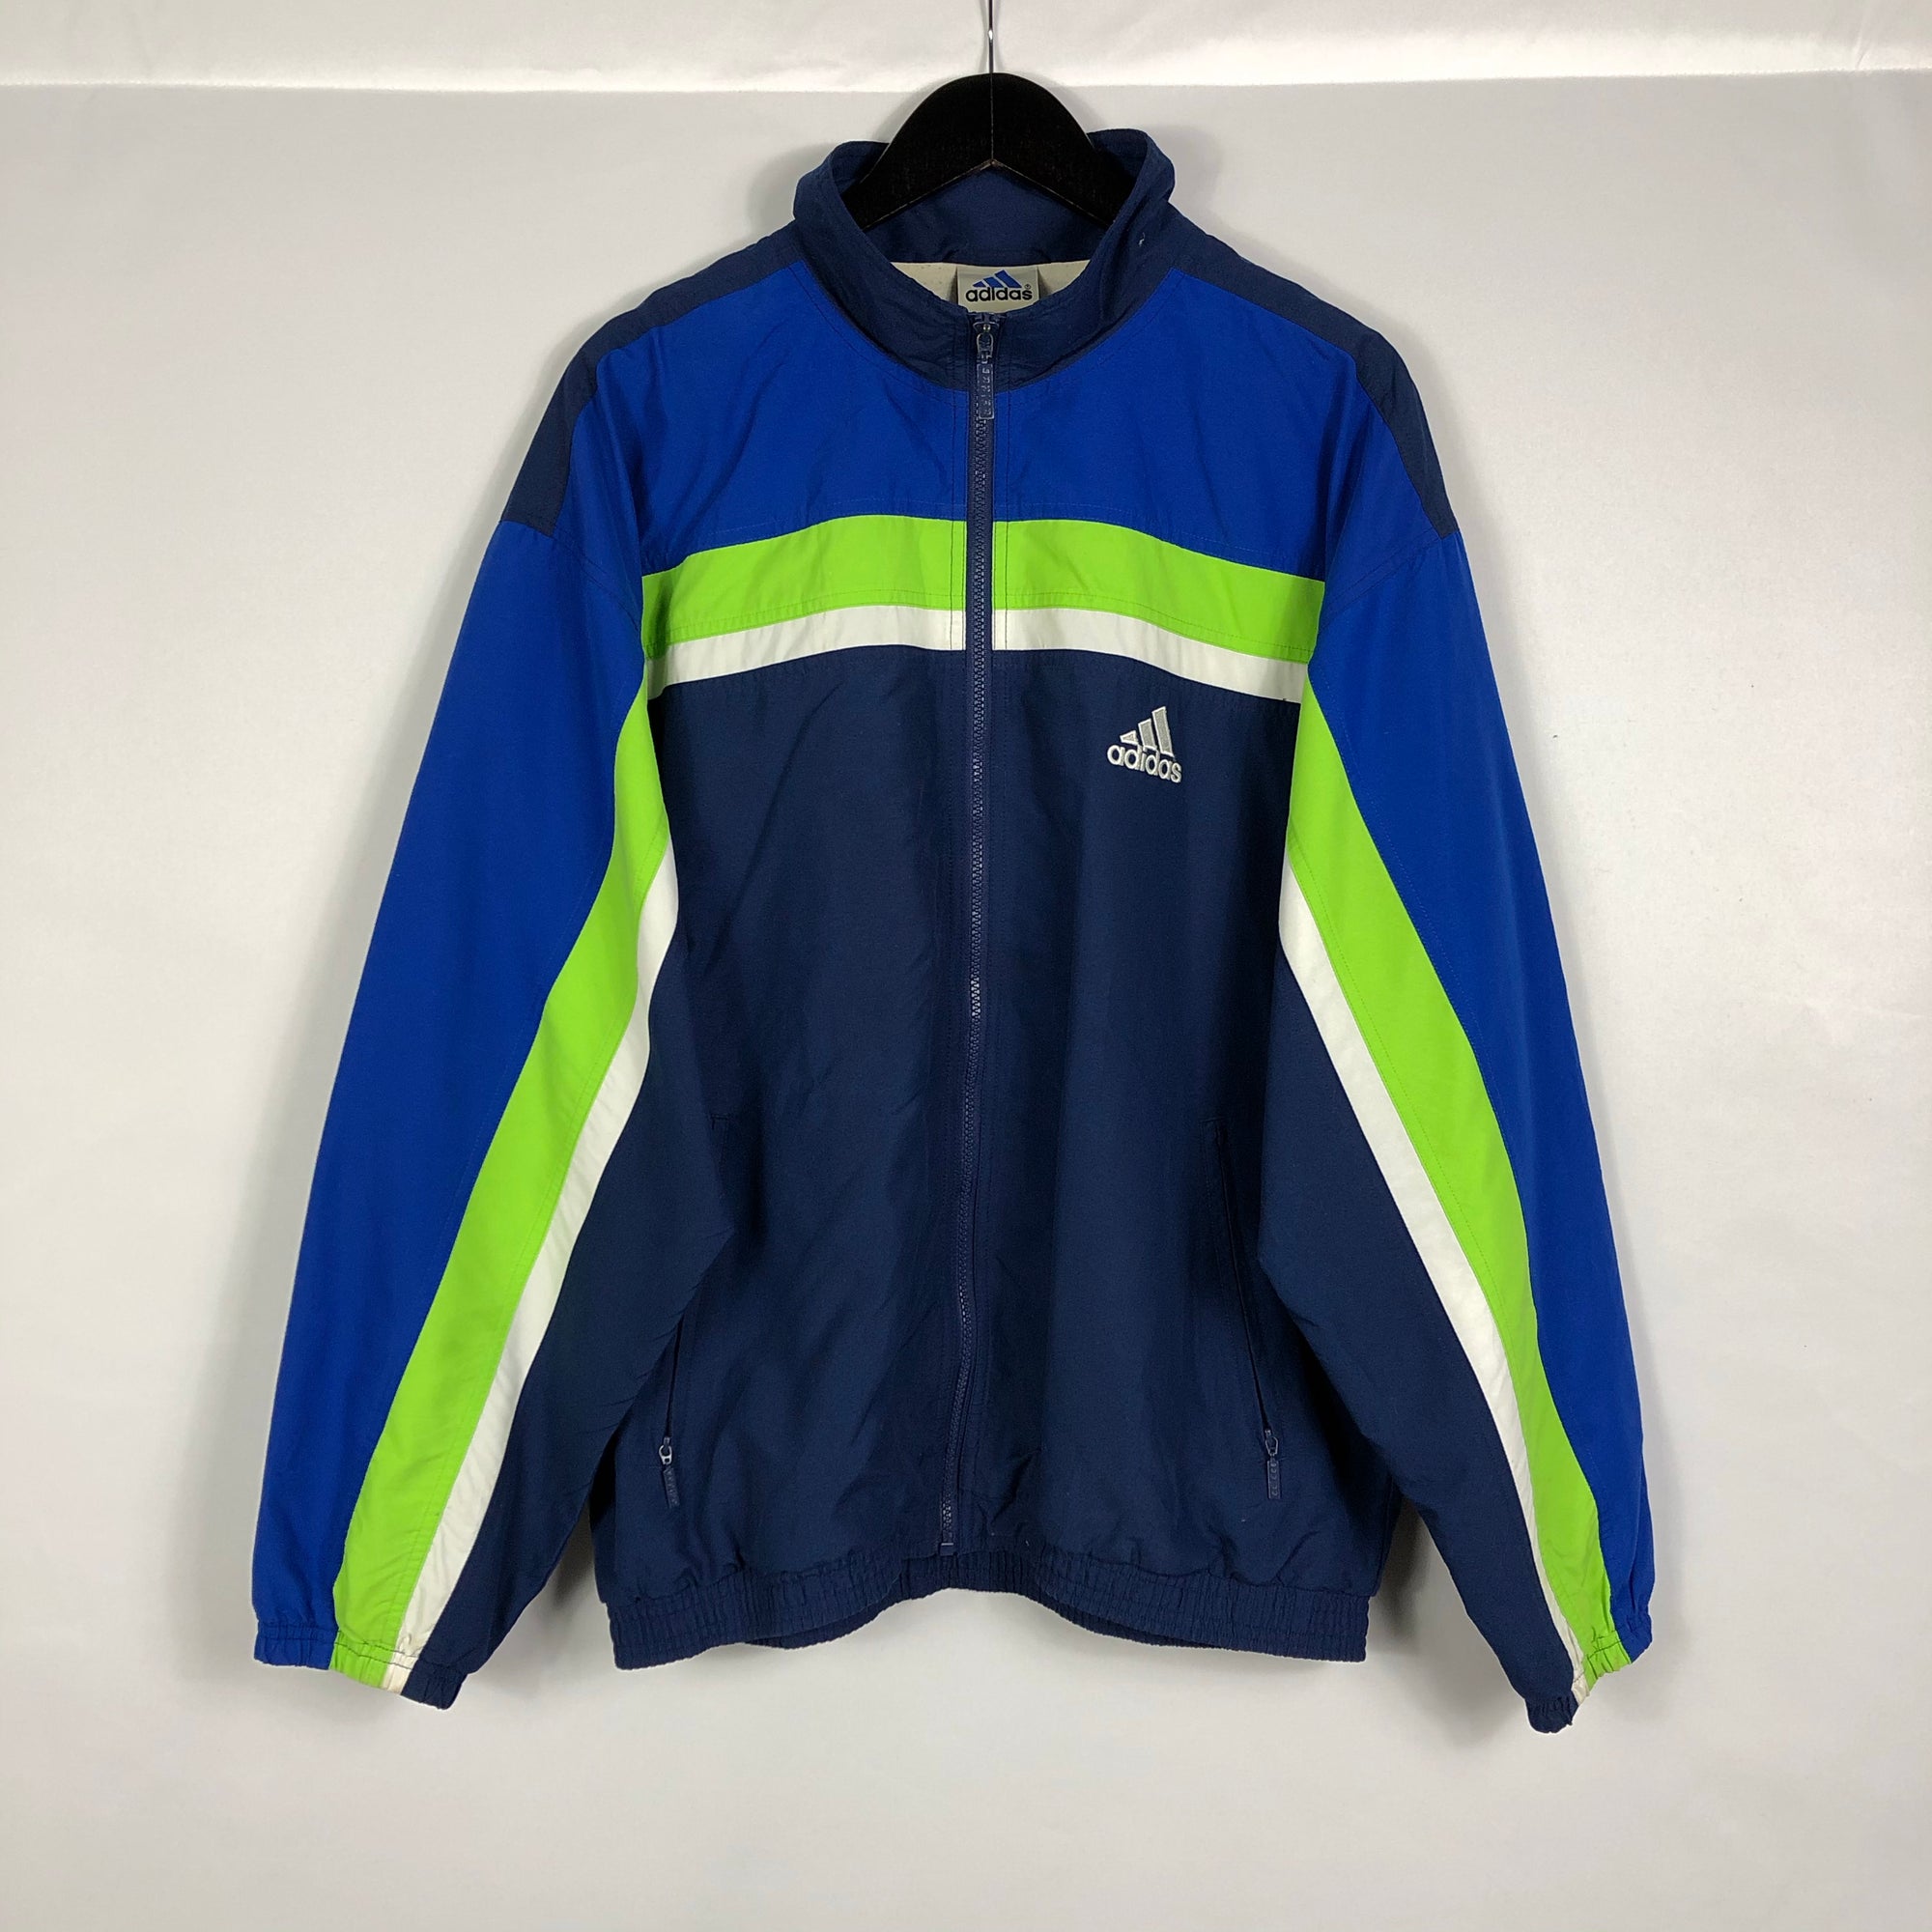 Vintage Adidas Track Jacket in Green, Blue & Navy - Men’s Large/Women’s XL